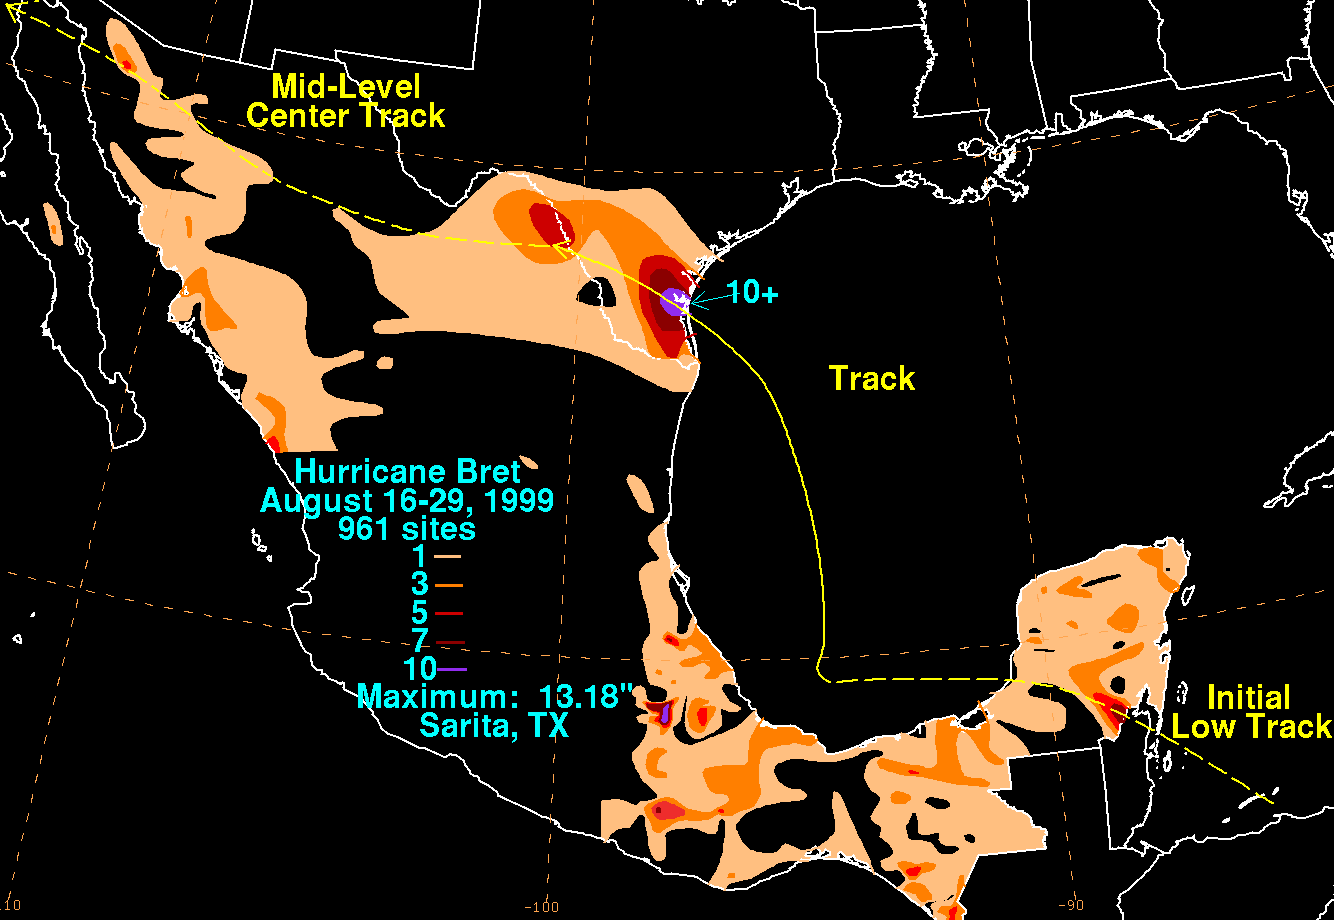 Hurricane Bret (1999) Rainfall